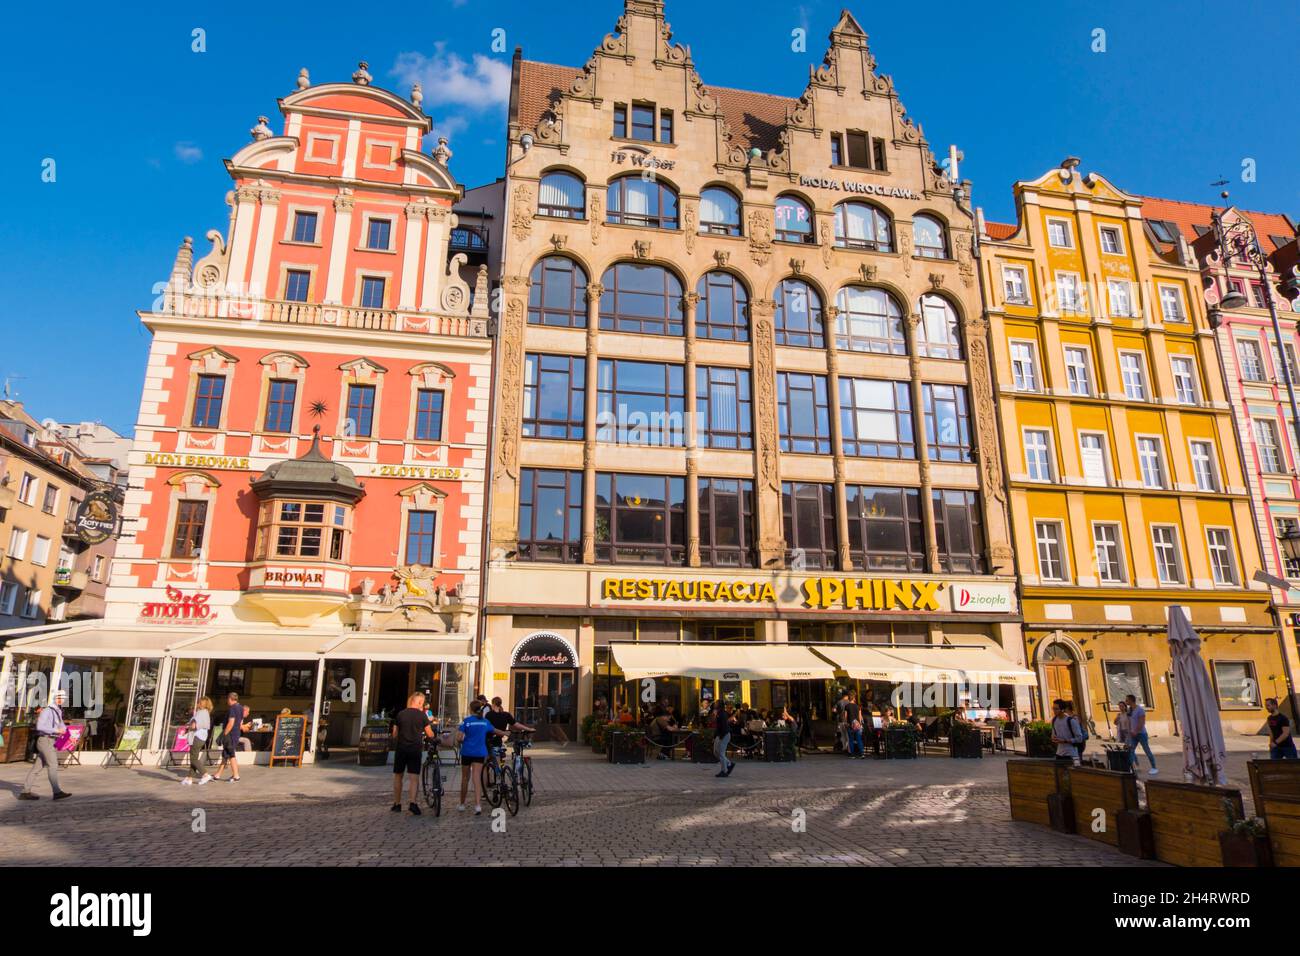 Rynek, market square, old town, Wroclaw, Poland Stock Photo